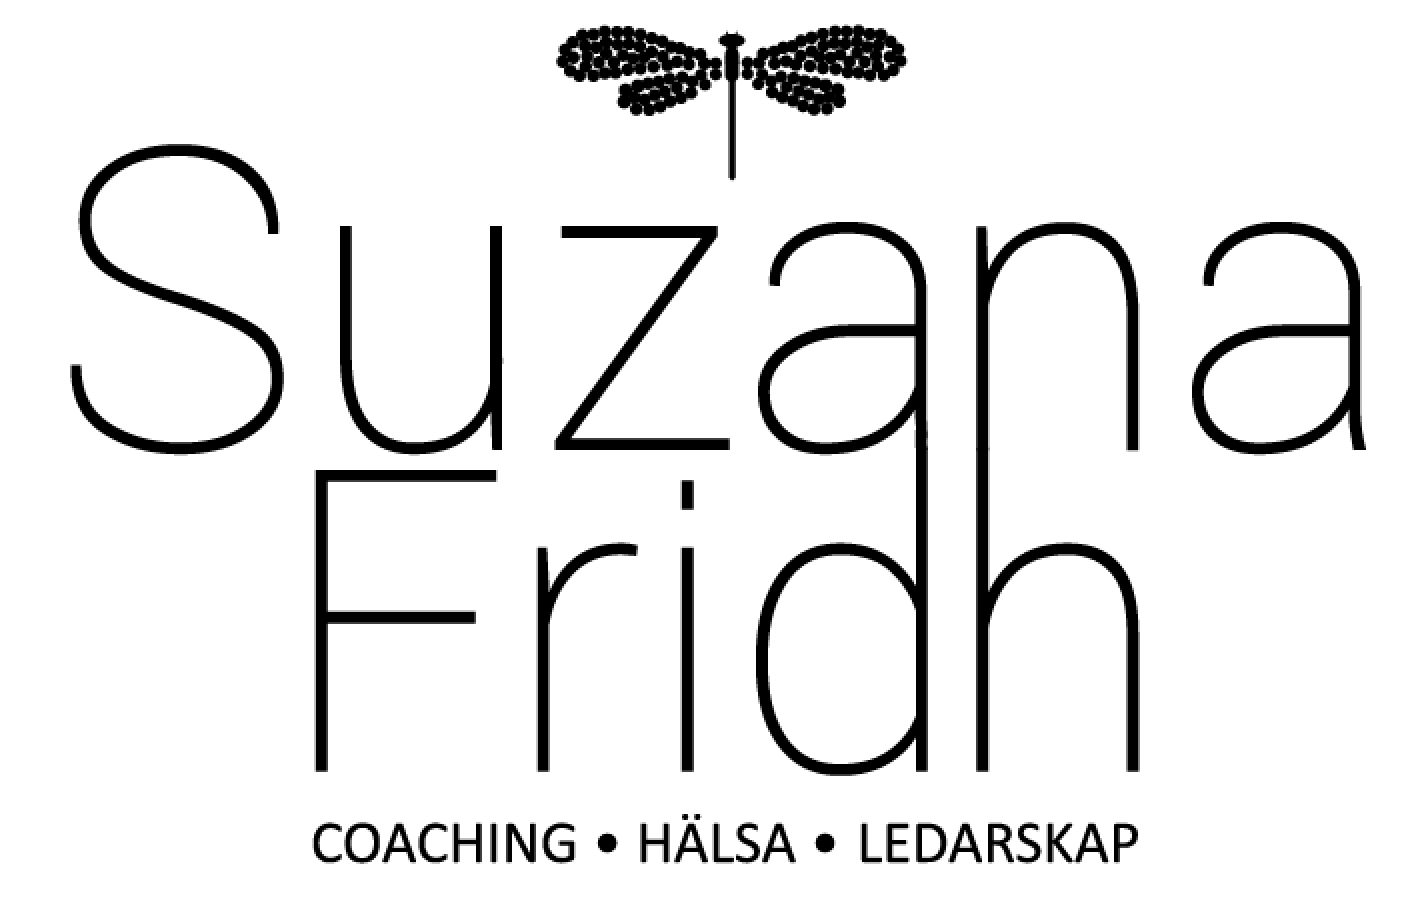 Suzana Fridh - coaching, hälsa & ledarskap